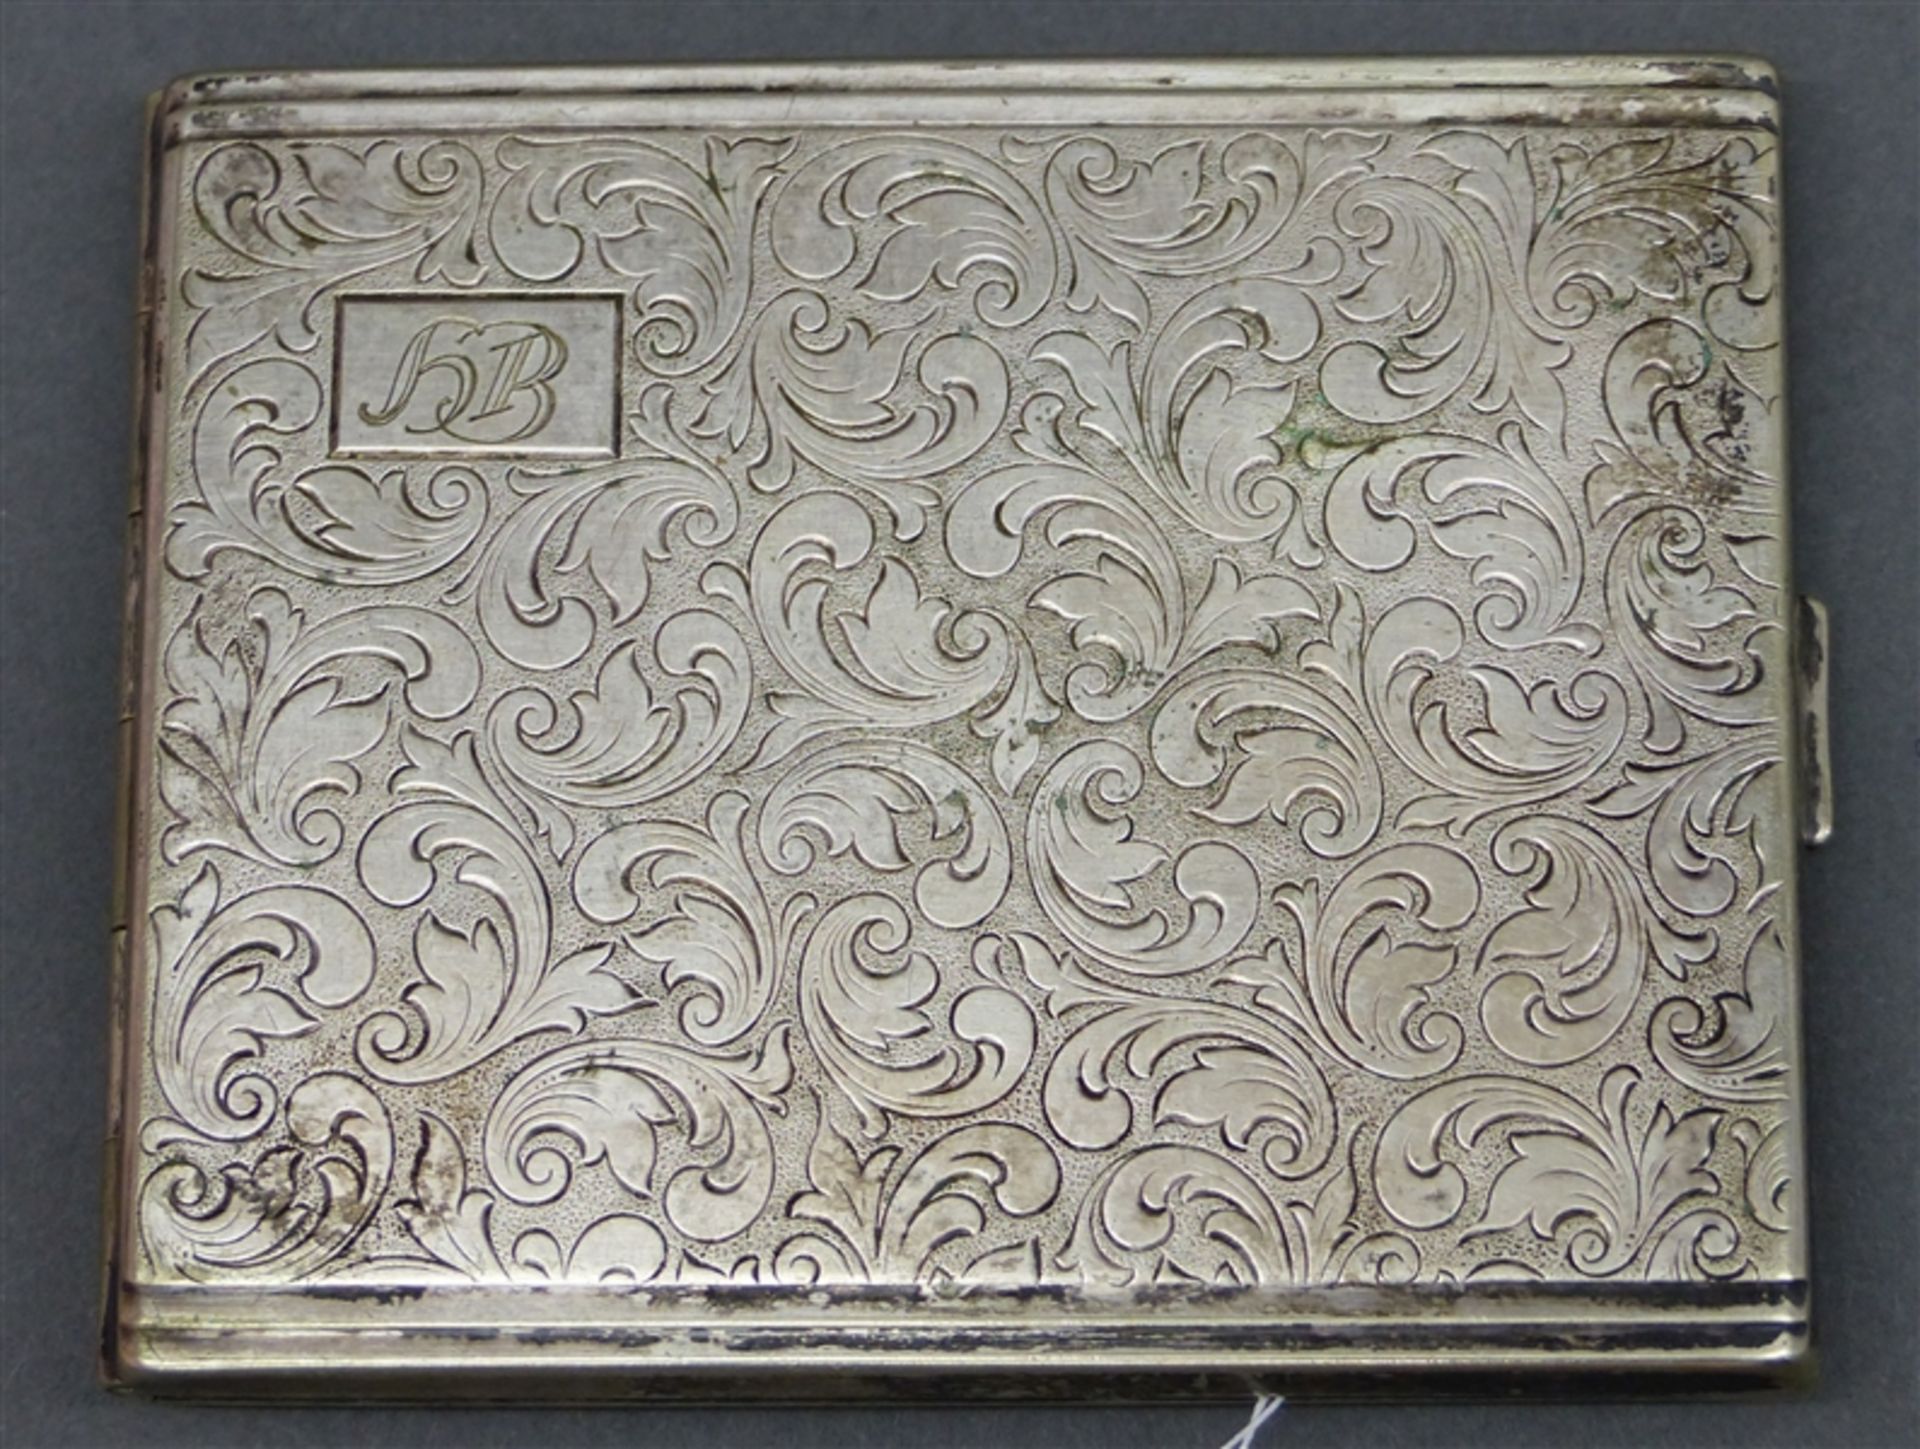 Zigarettenetui, um 1900 Alpacca, Ornamentgravur, Monogrammkartusche: H.B., 8x9 cm,